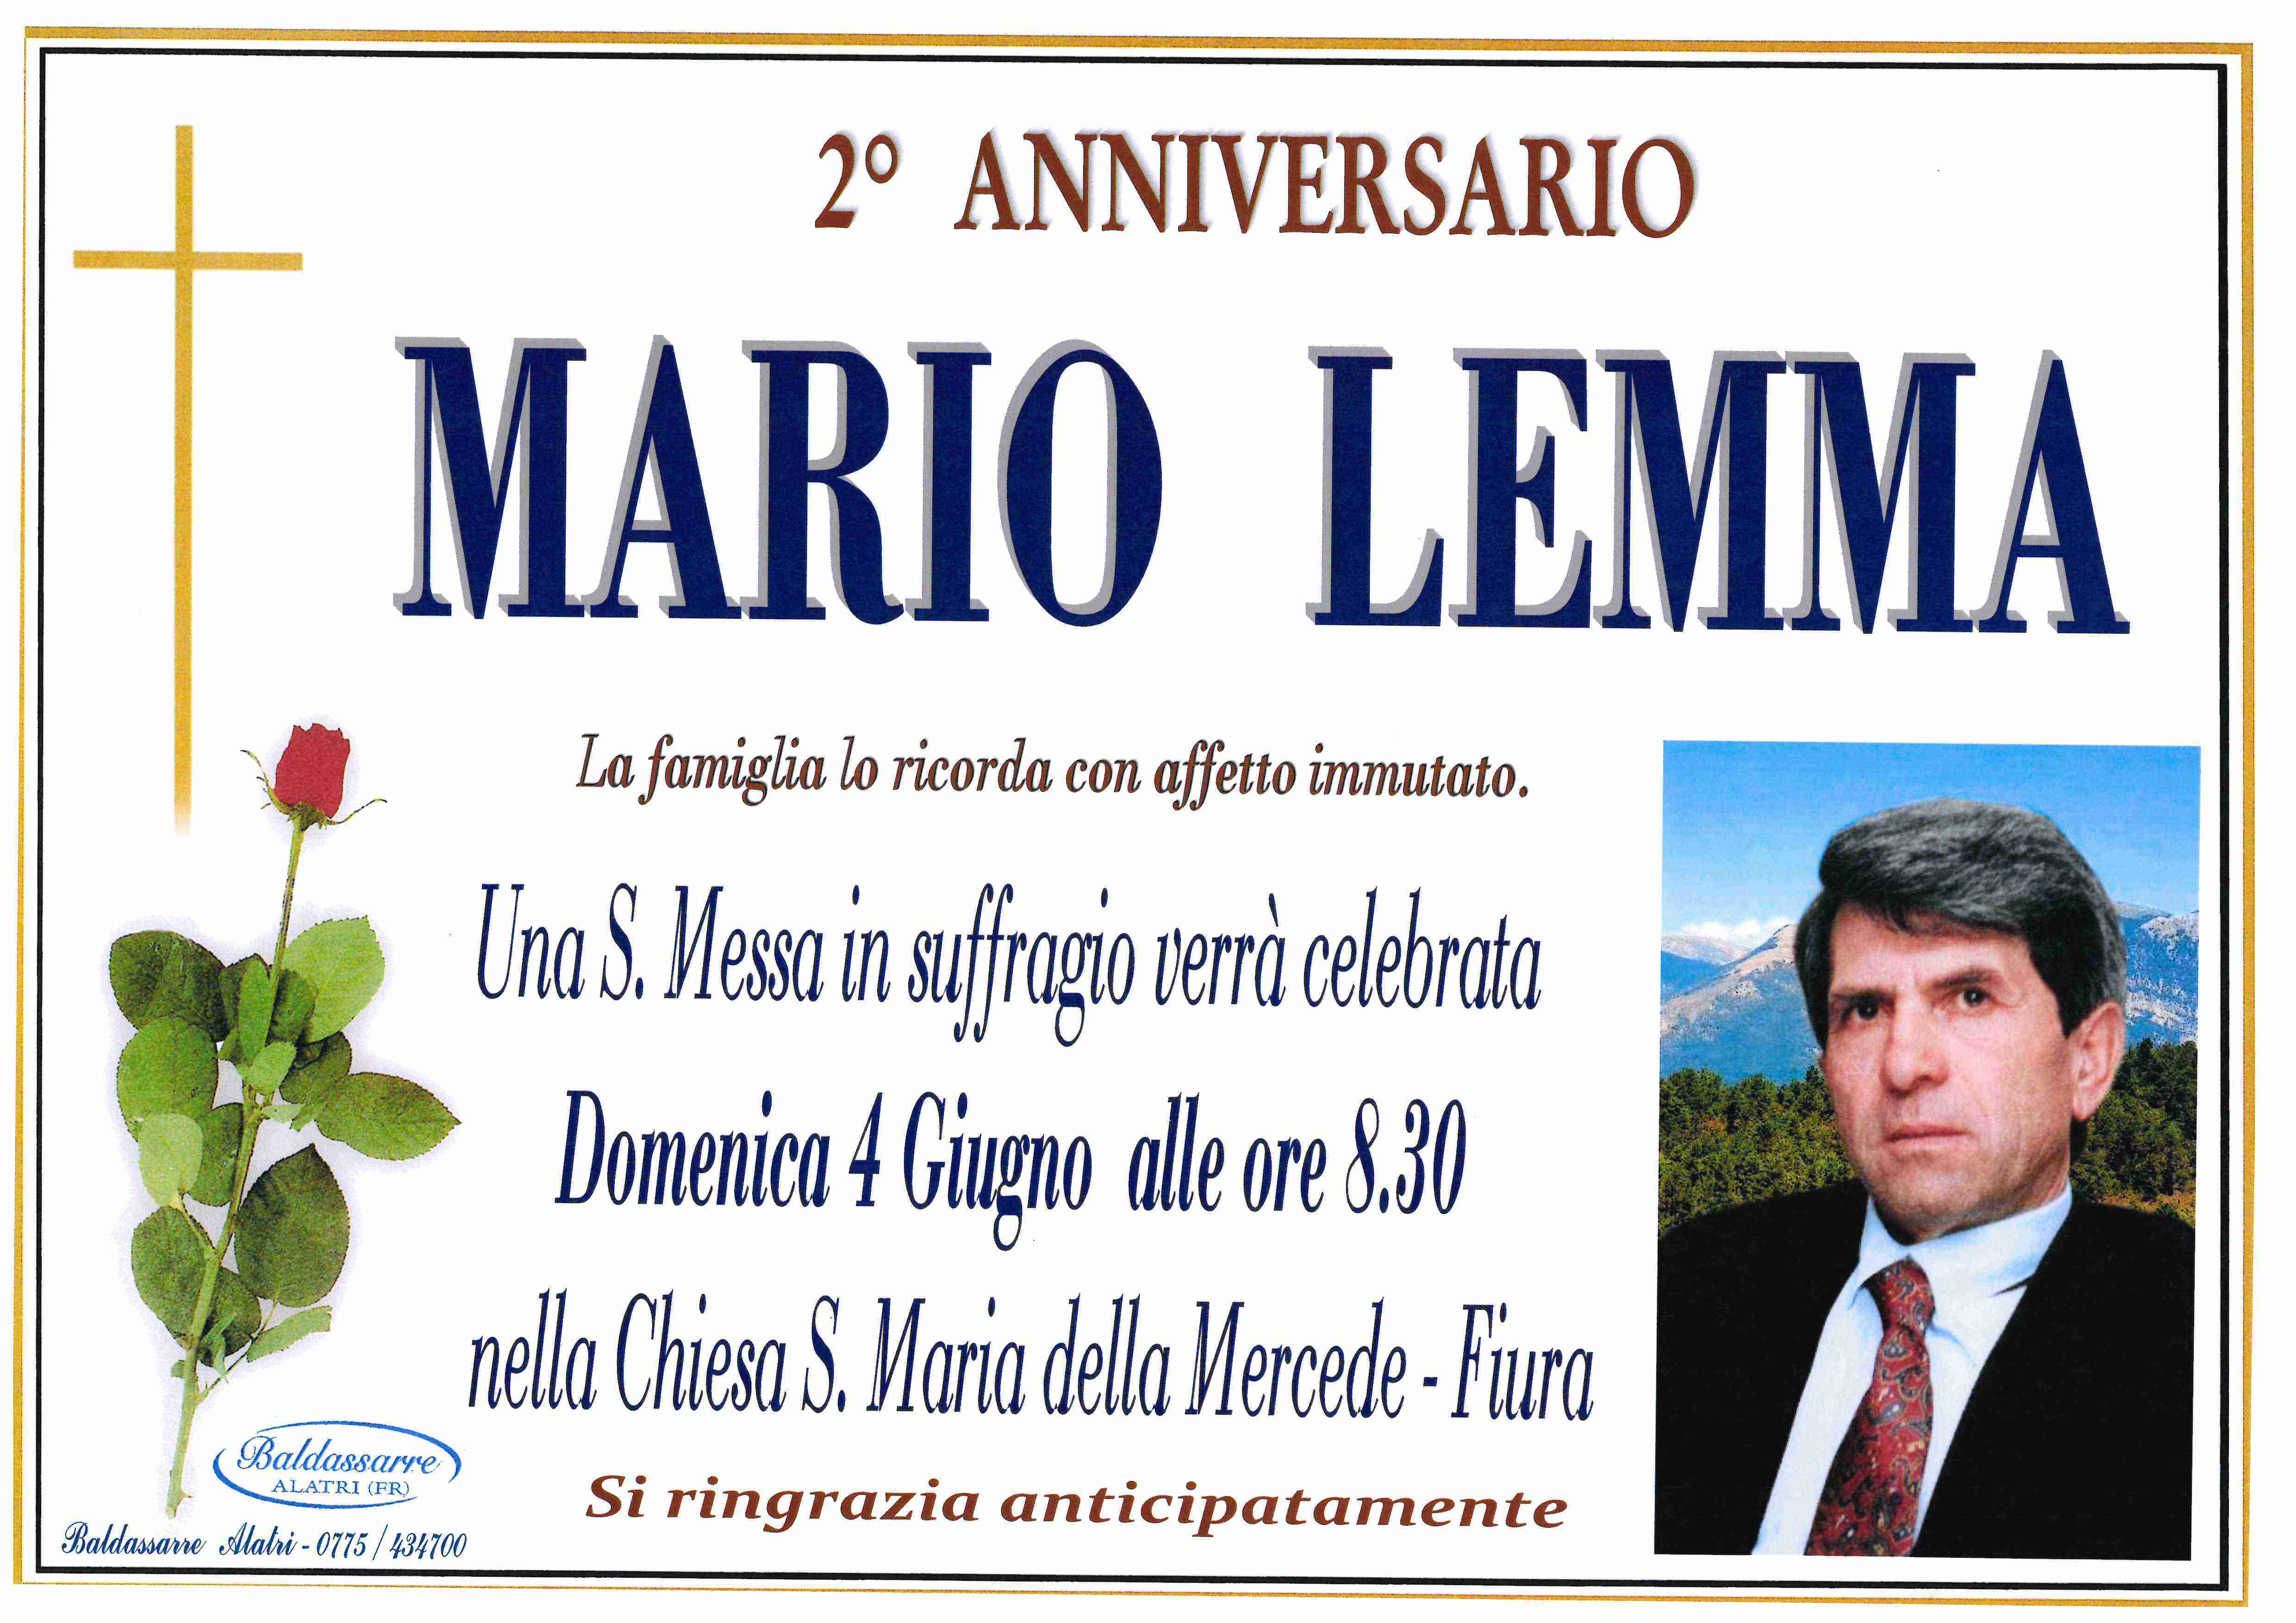 Mario Lemma